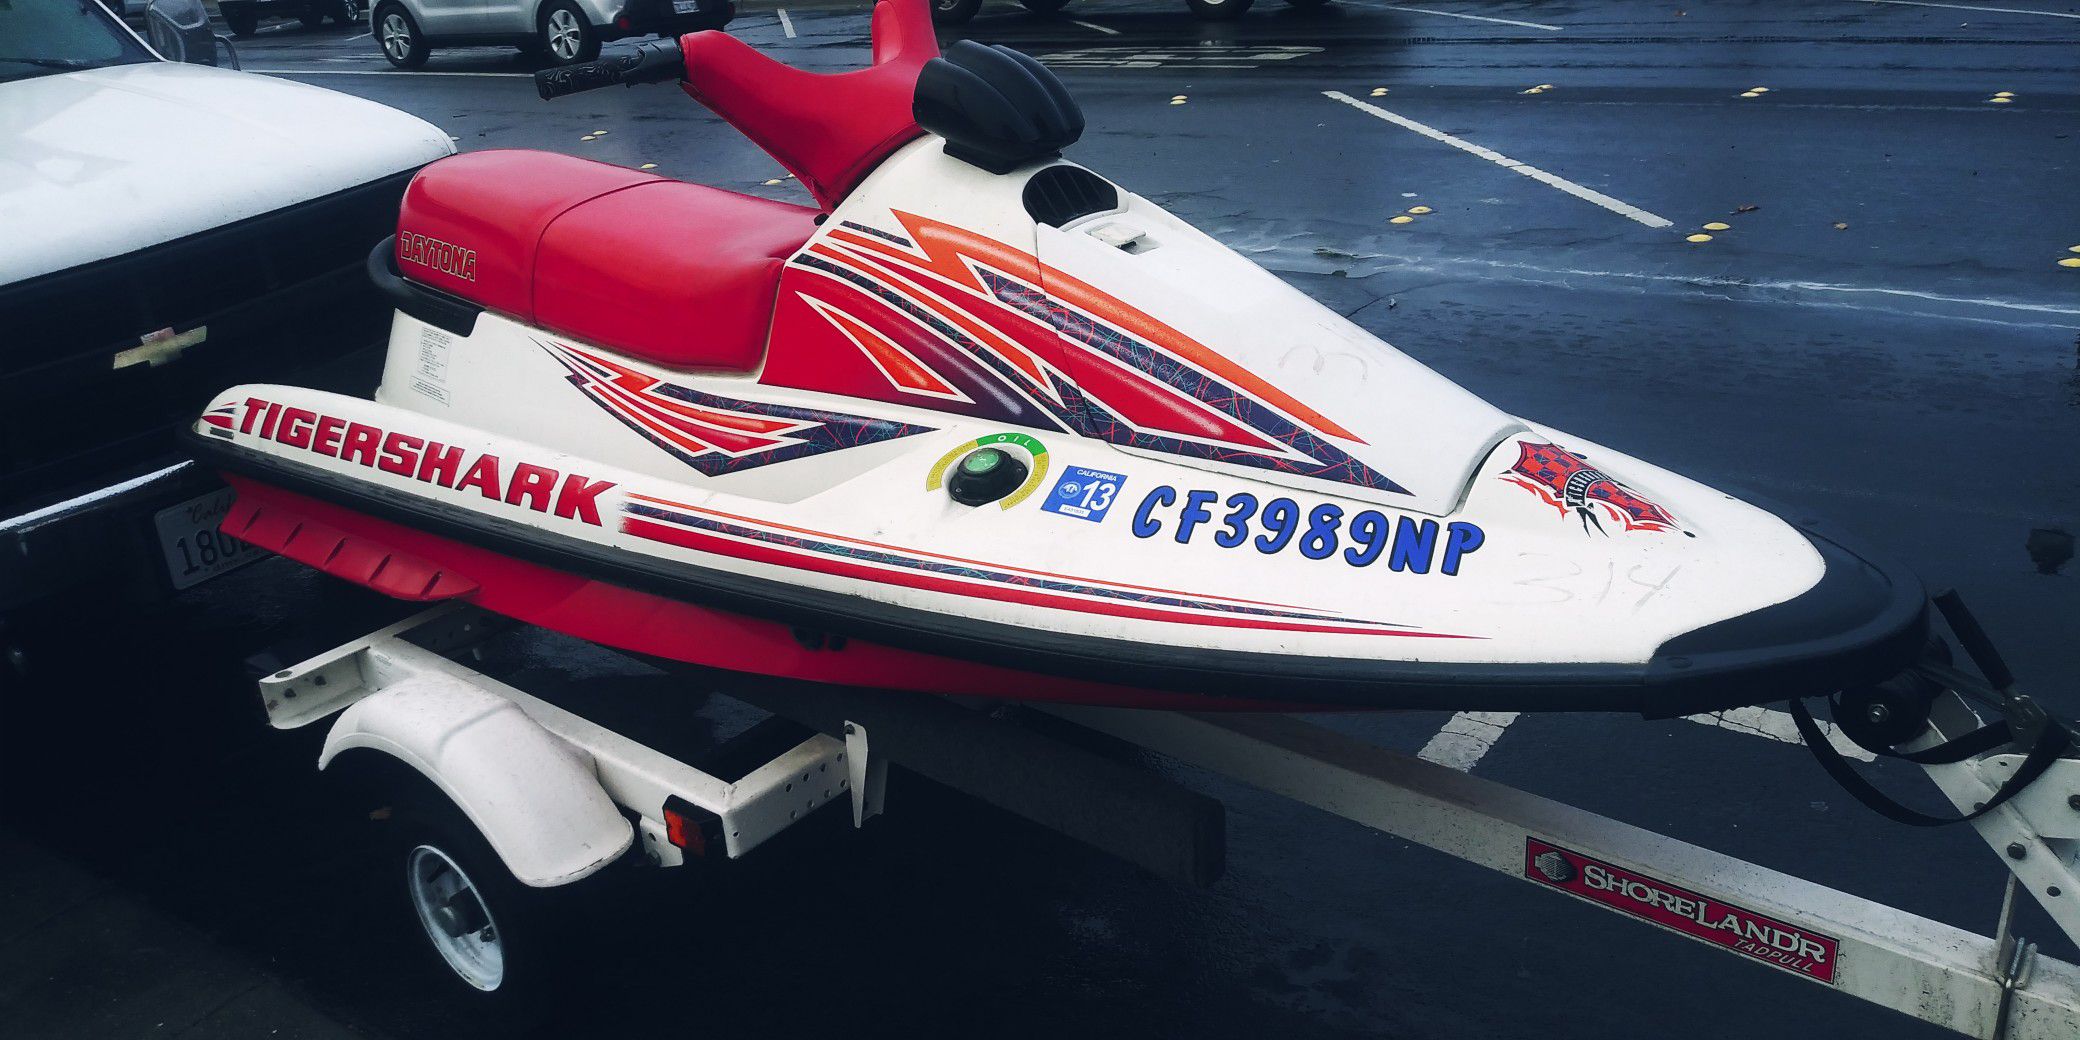 1995 tigershark 1100 cc jet ski $1200 cash today.